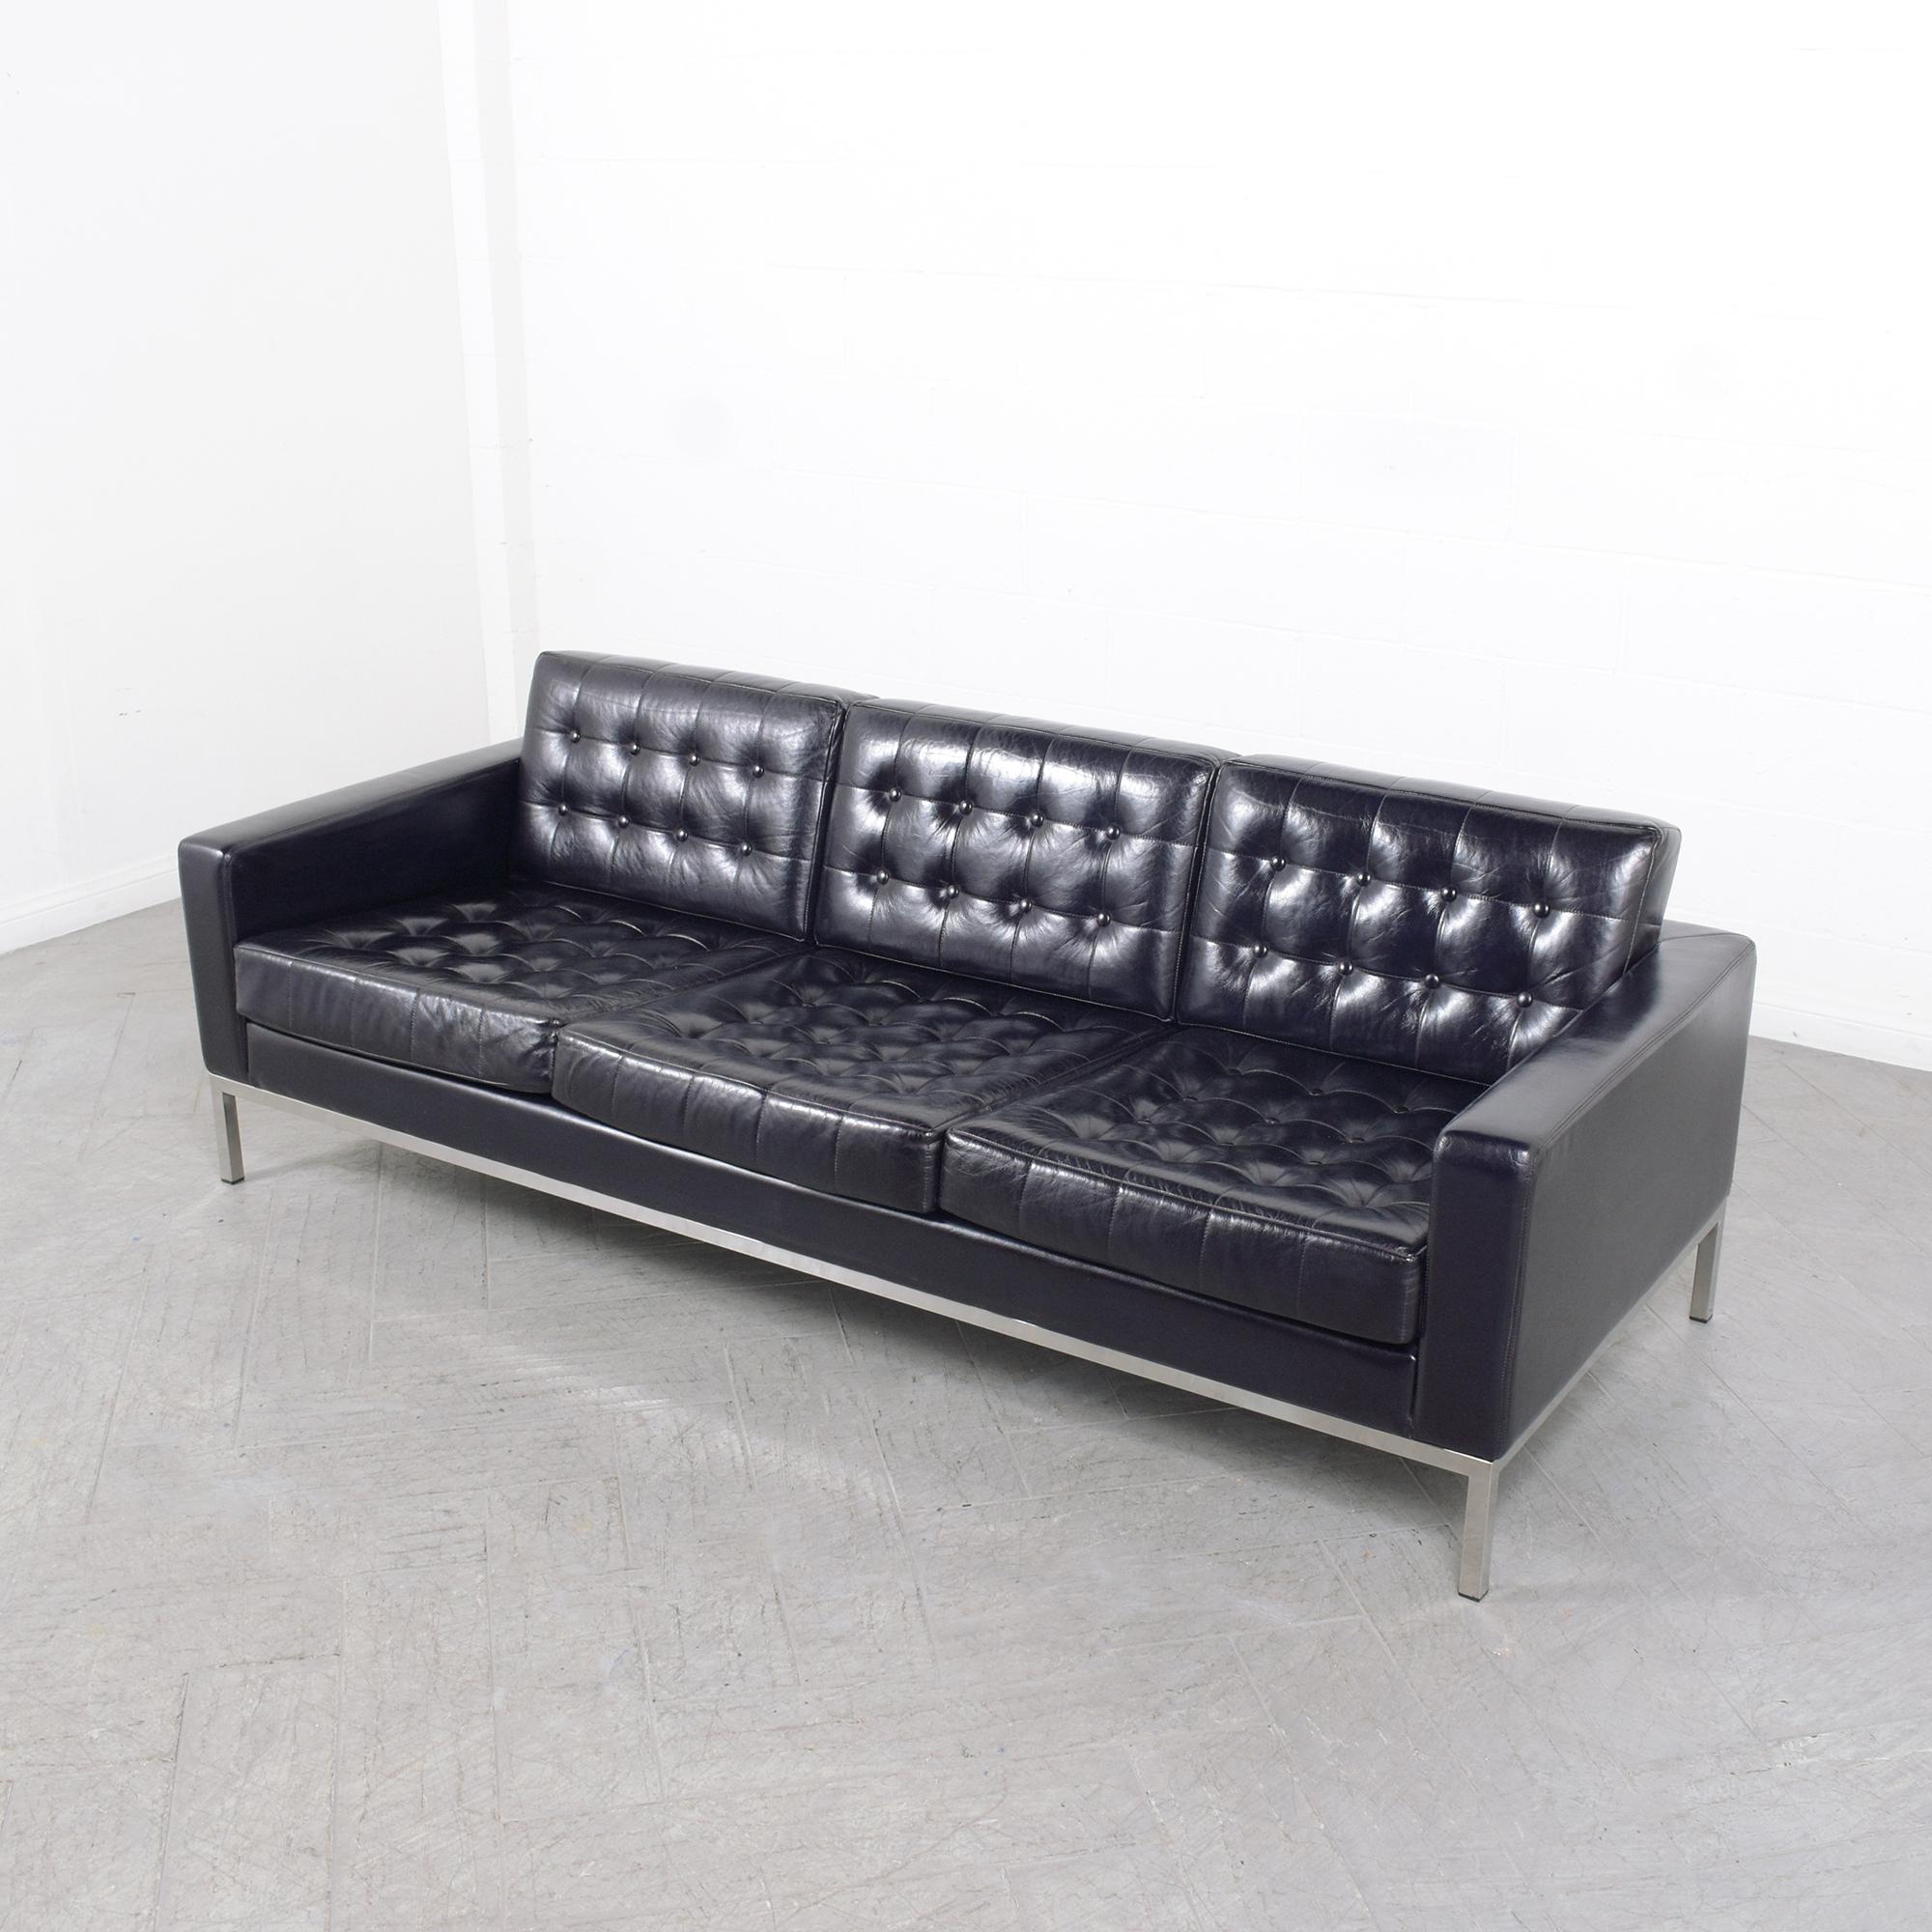 Brushed 1980s Vintage Leather Sofa: Timeless Mid-Century Elegance Restored For Sale